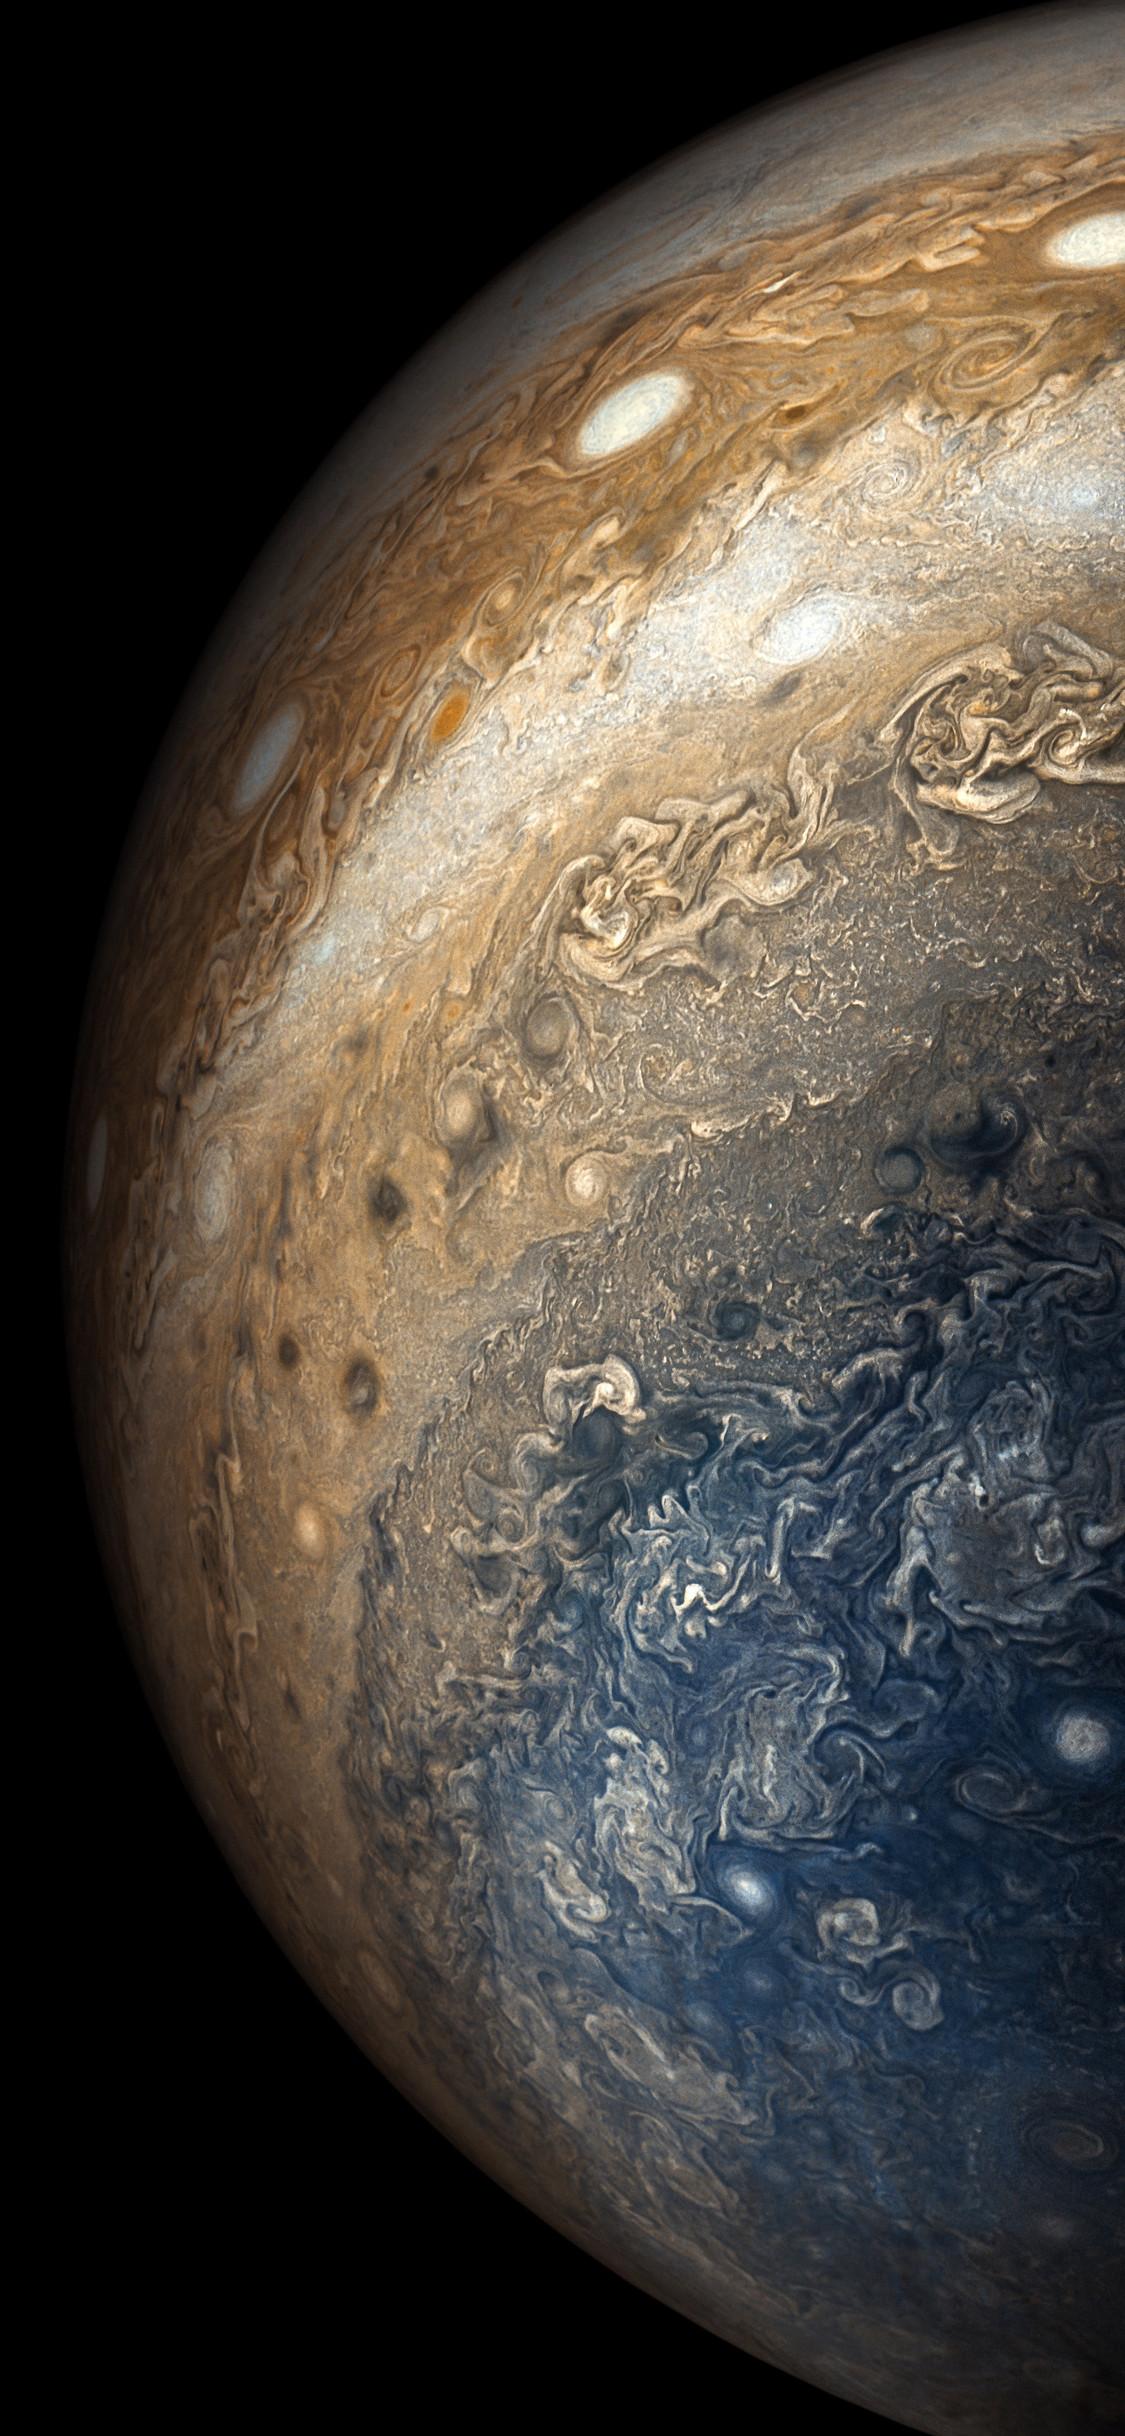 Jupiter Planet 8K iPhone XS, iPhone iPhone X HD 4k Wallpaper, Image, Background Phone Wallpaper